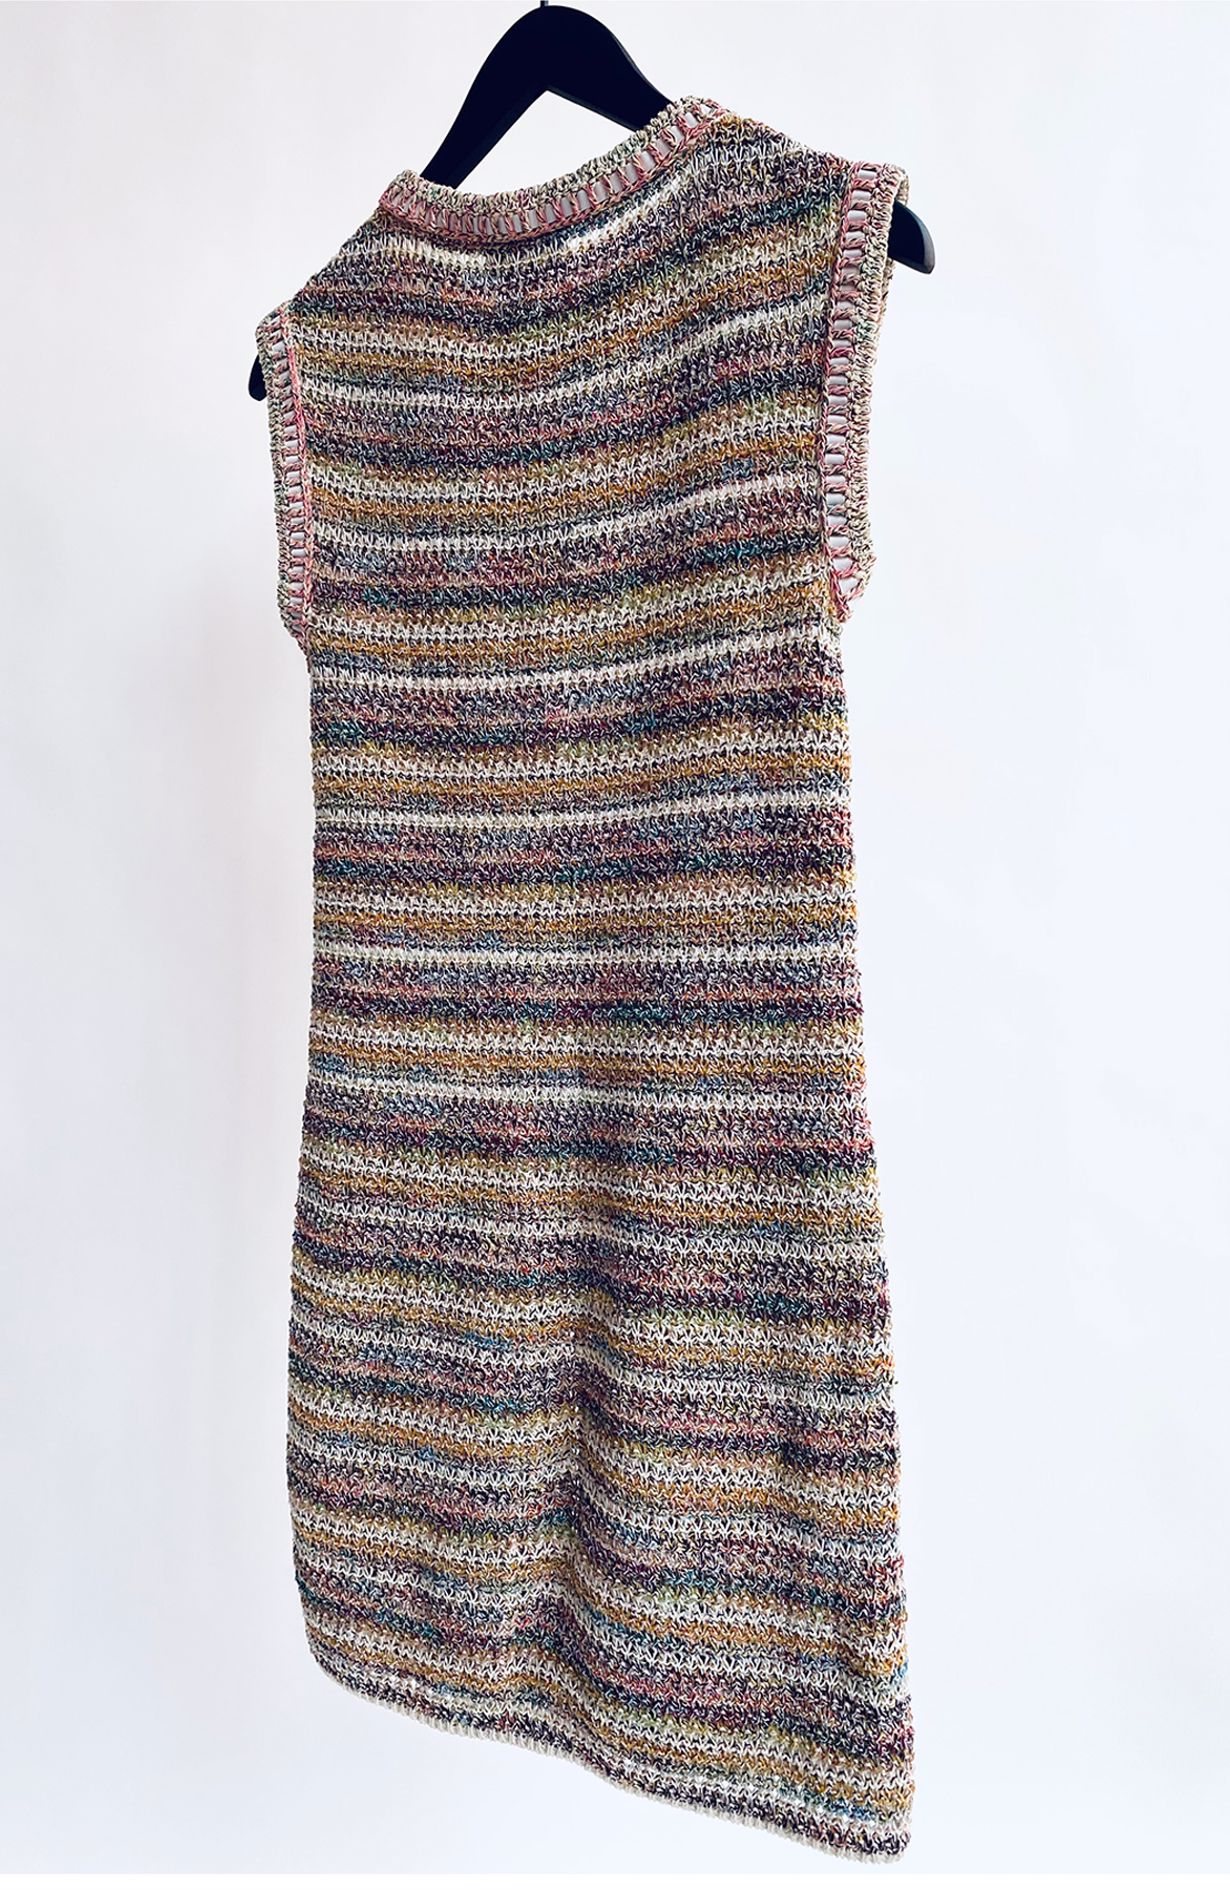 Chanel dress no sleeve light color knit FR 36